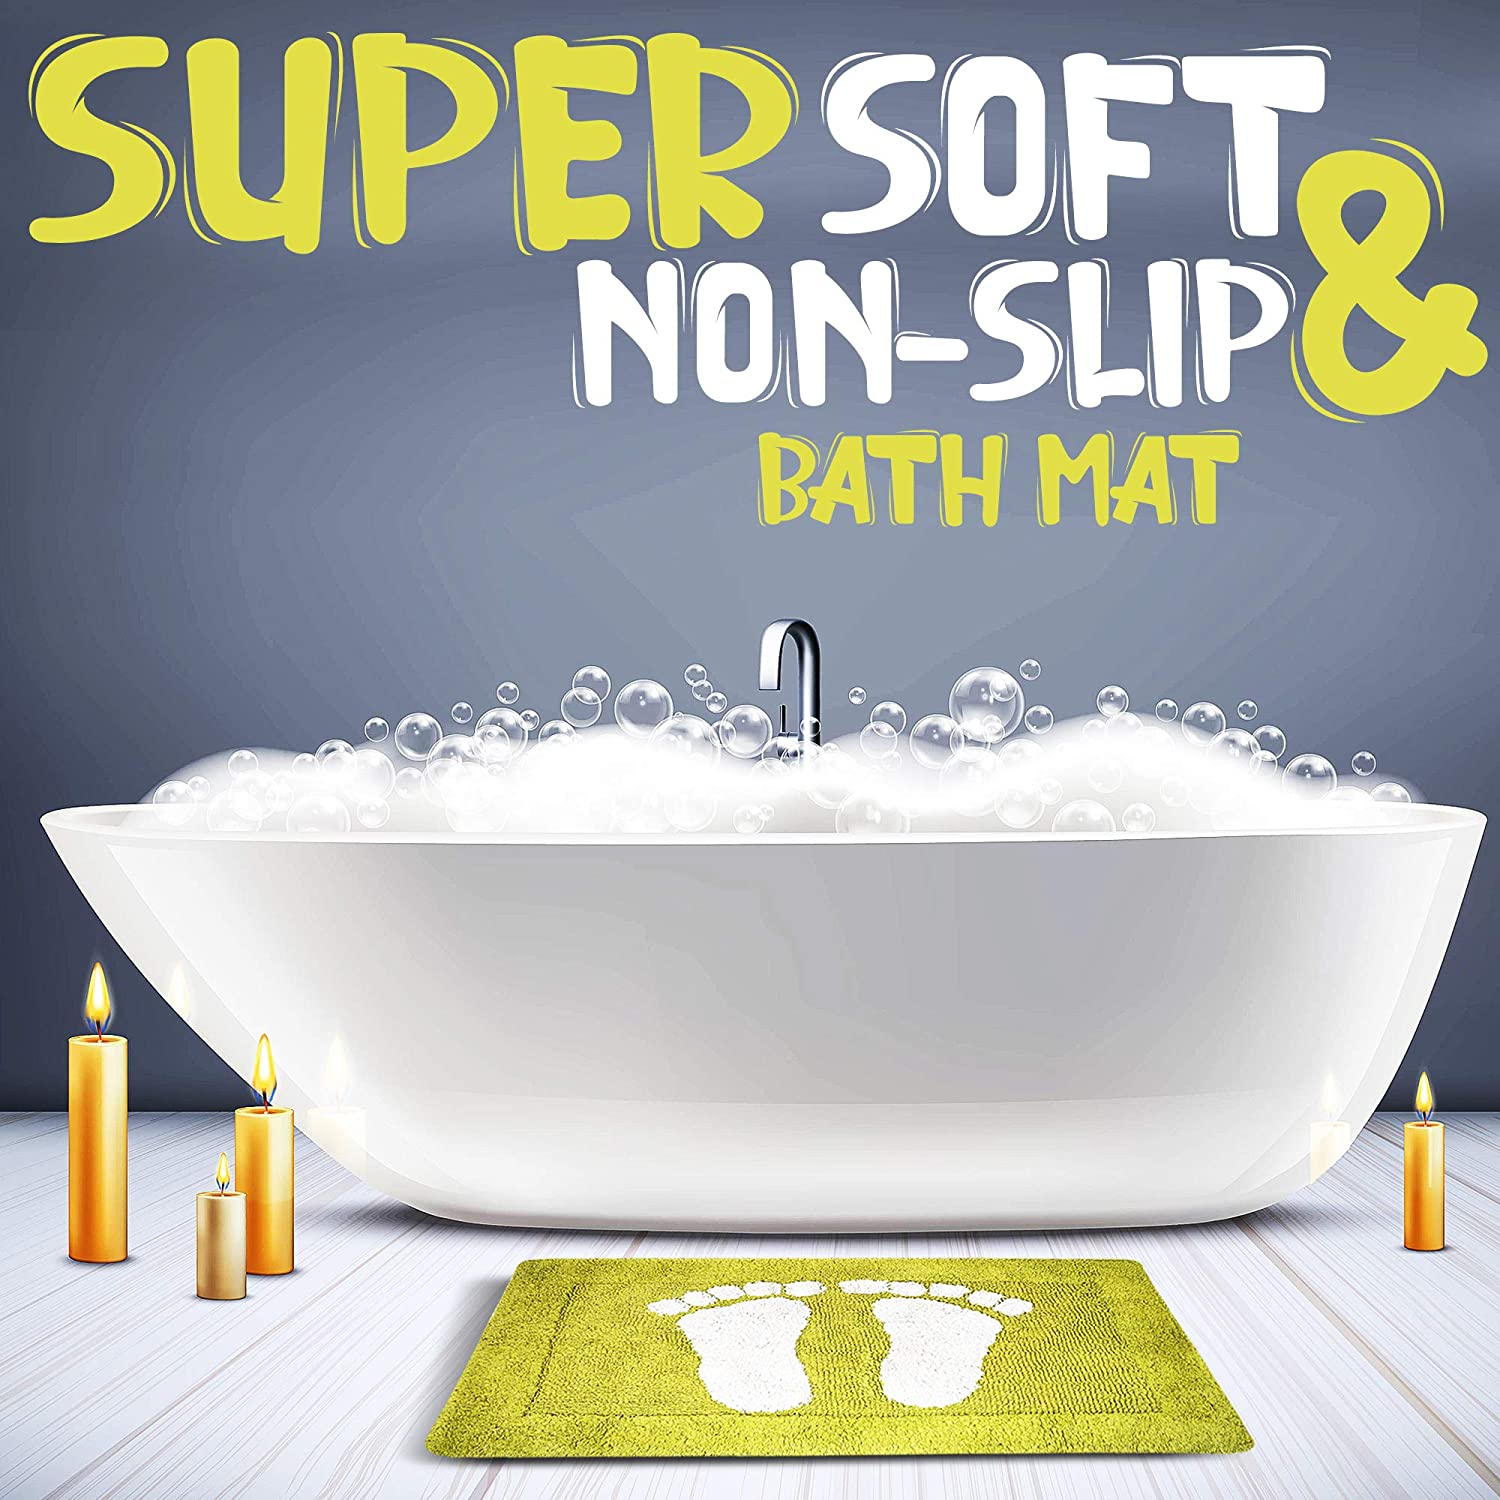 Cotton-Bath-Mats-2000gsm-Non-Slip